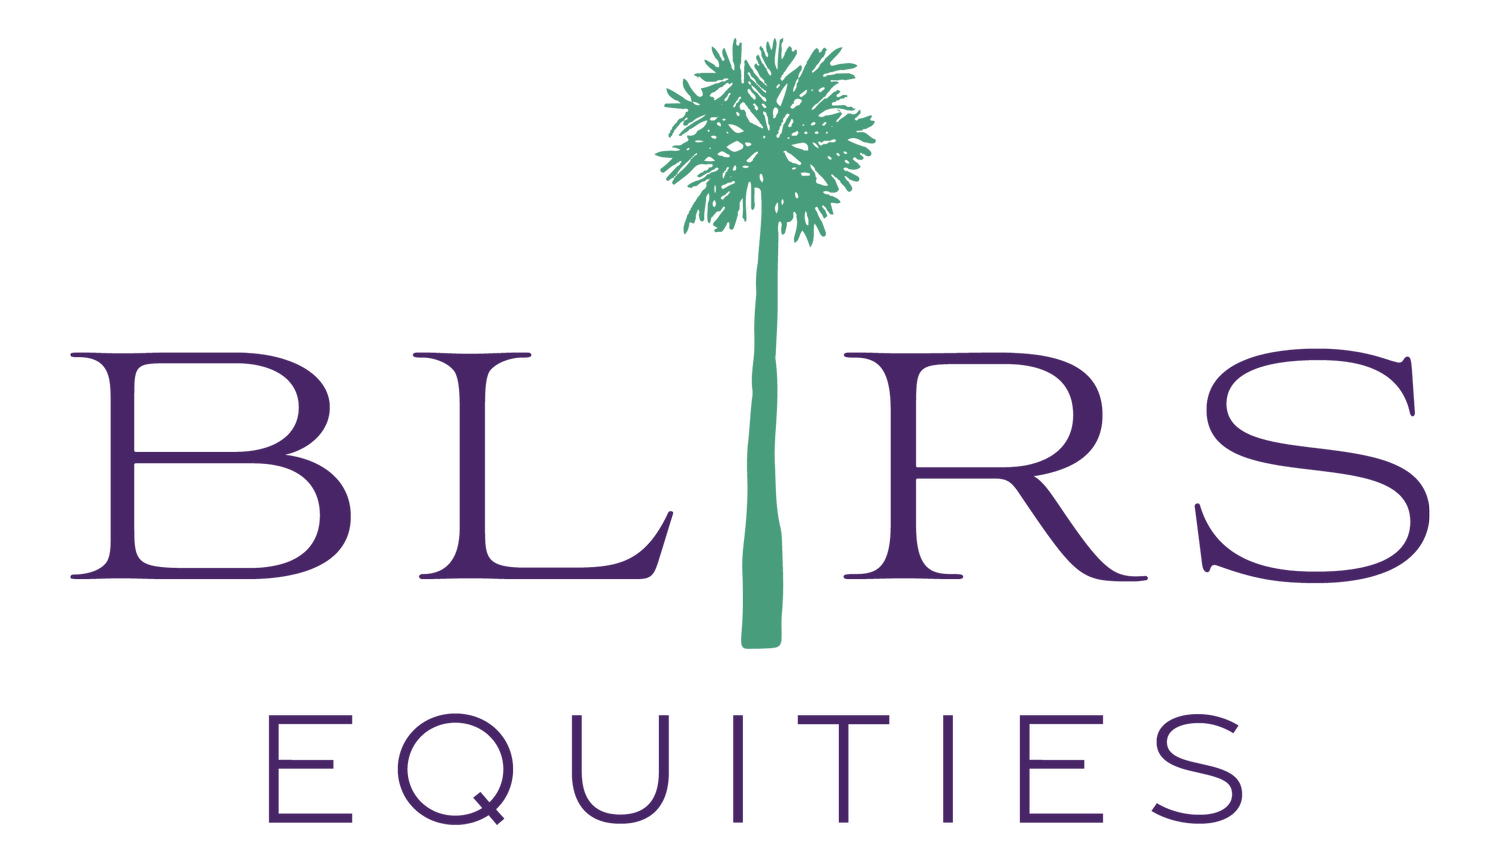 BLRS Equities